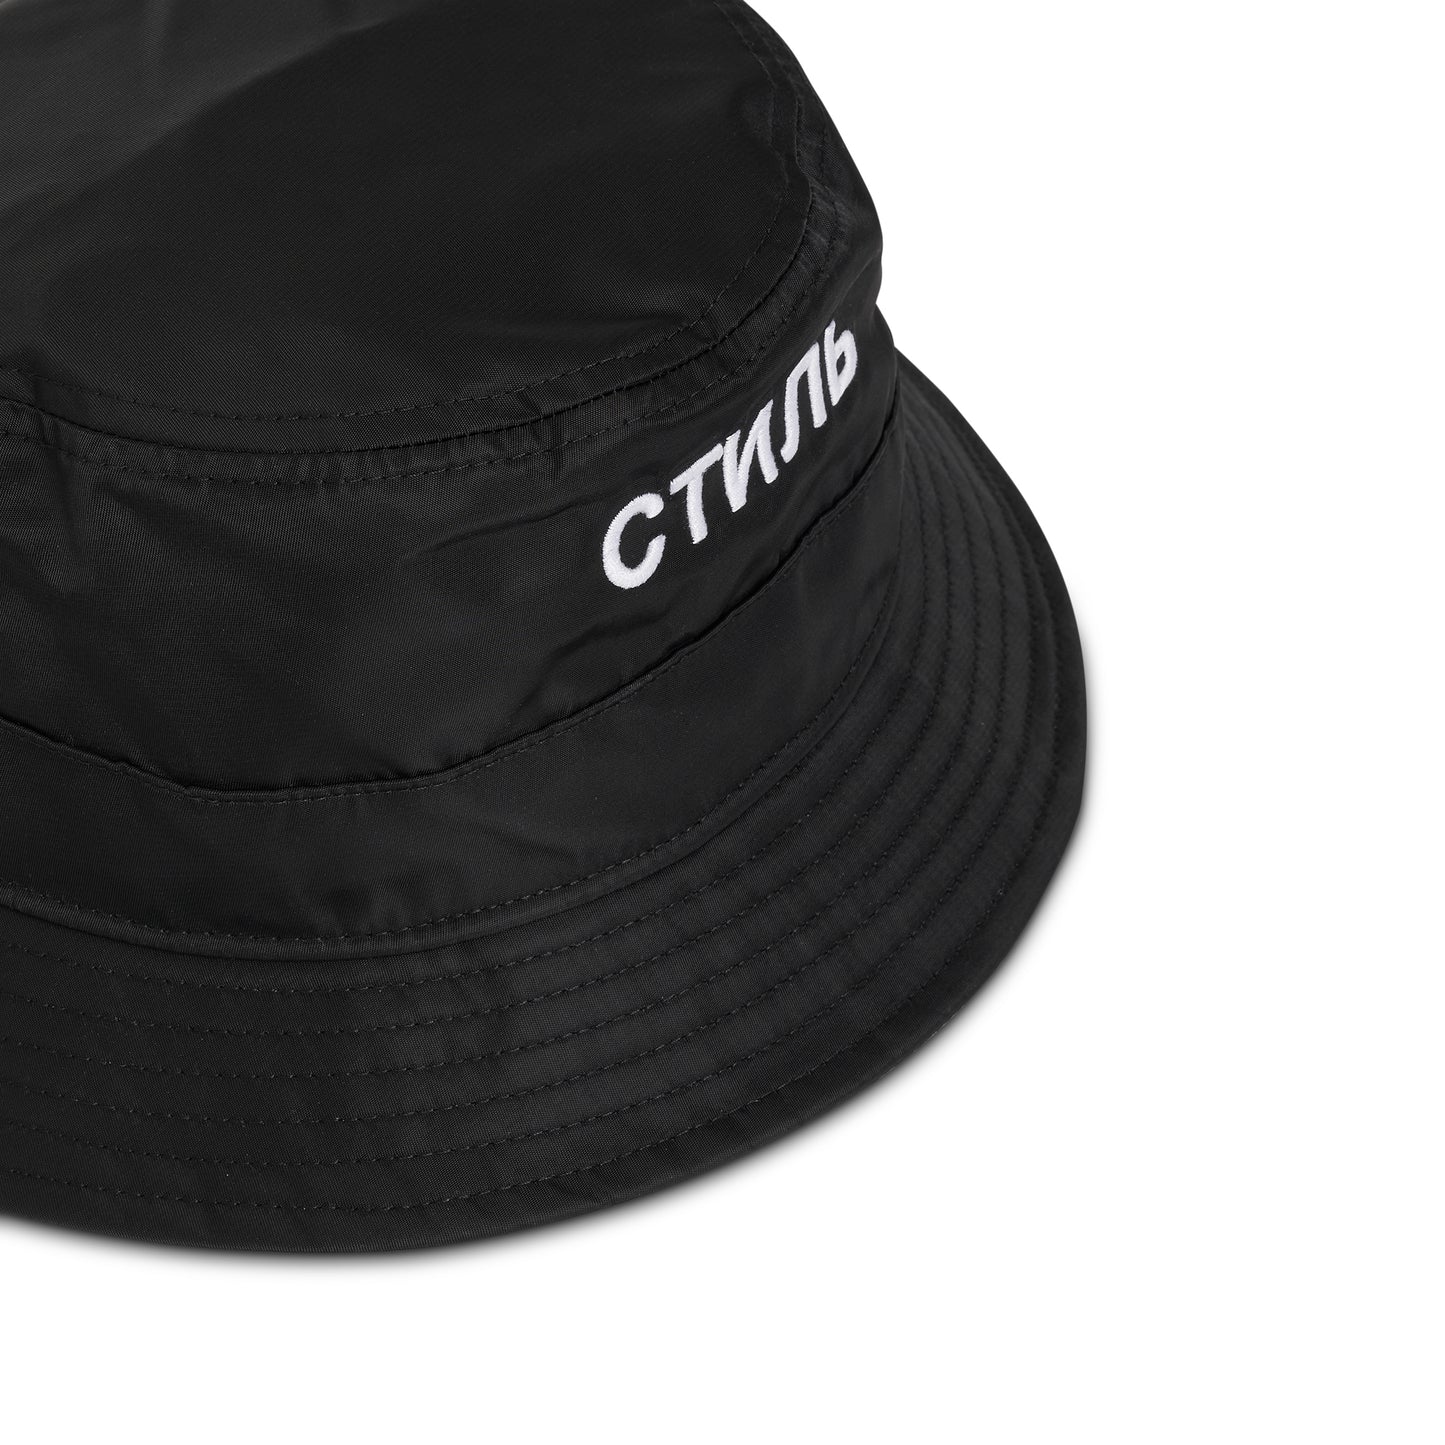 CTNMB Bucket Hat in Black